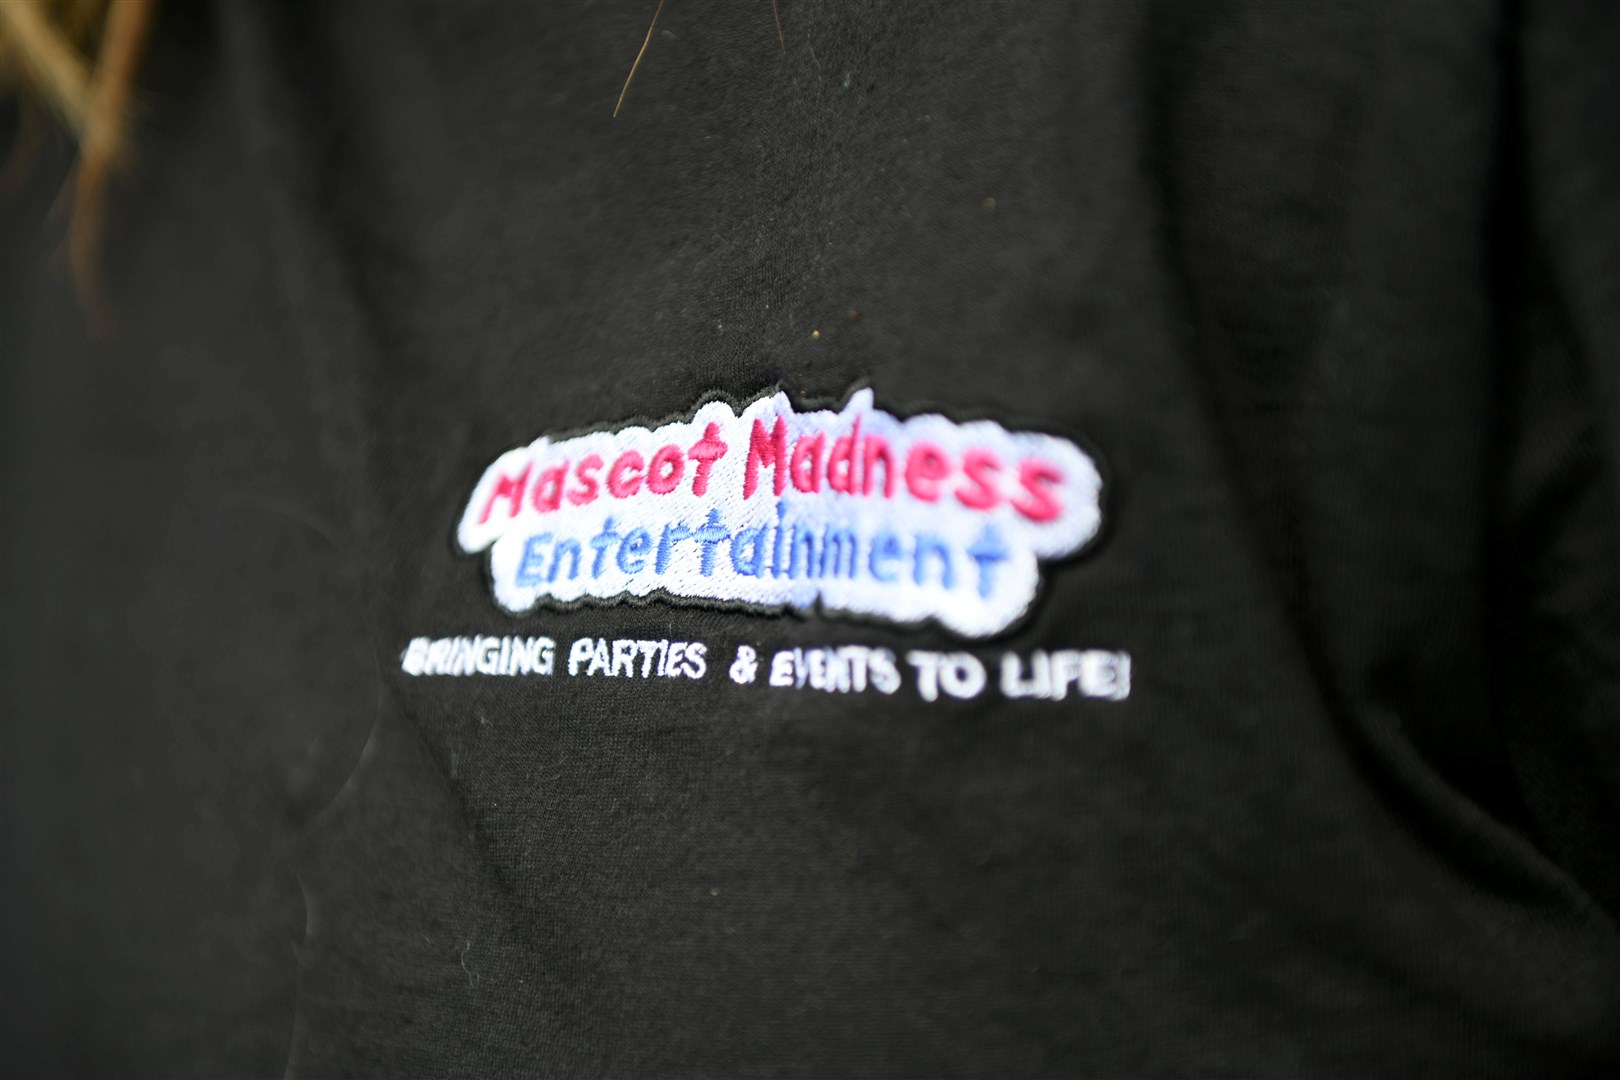 Mascot Madness Entertainment logo. Picture: Callum Mackay